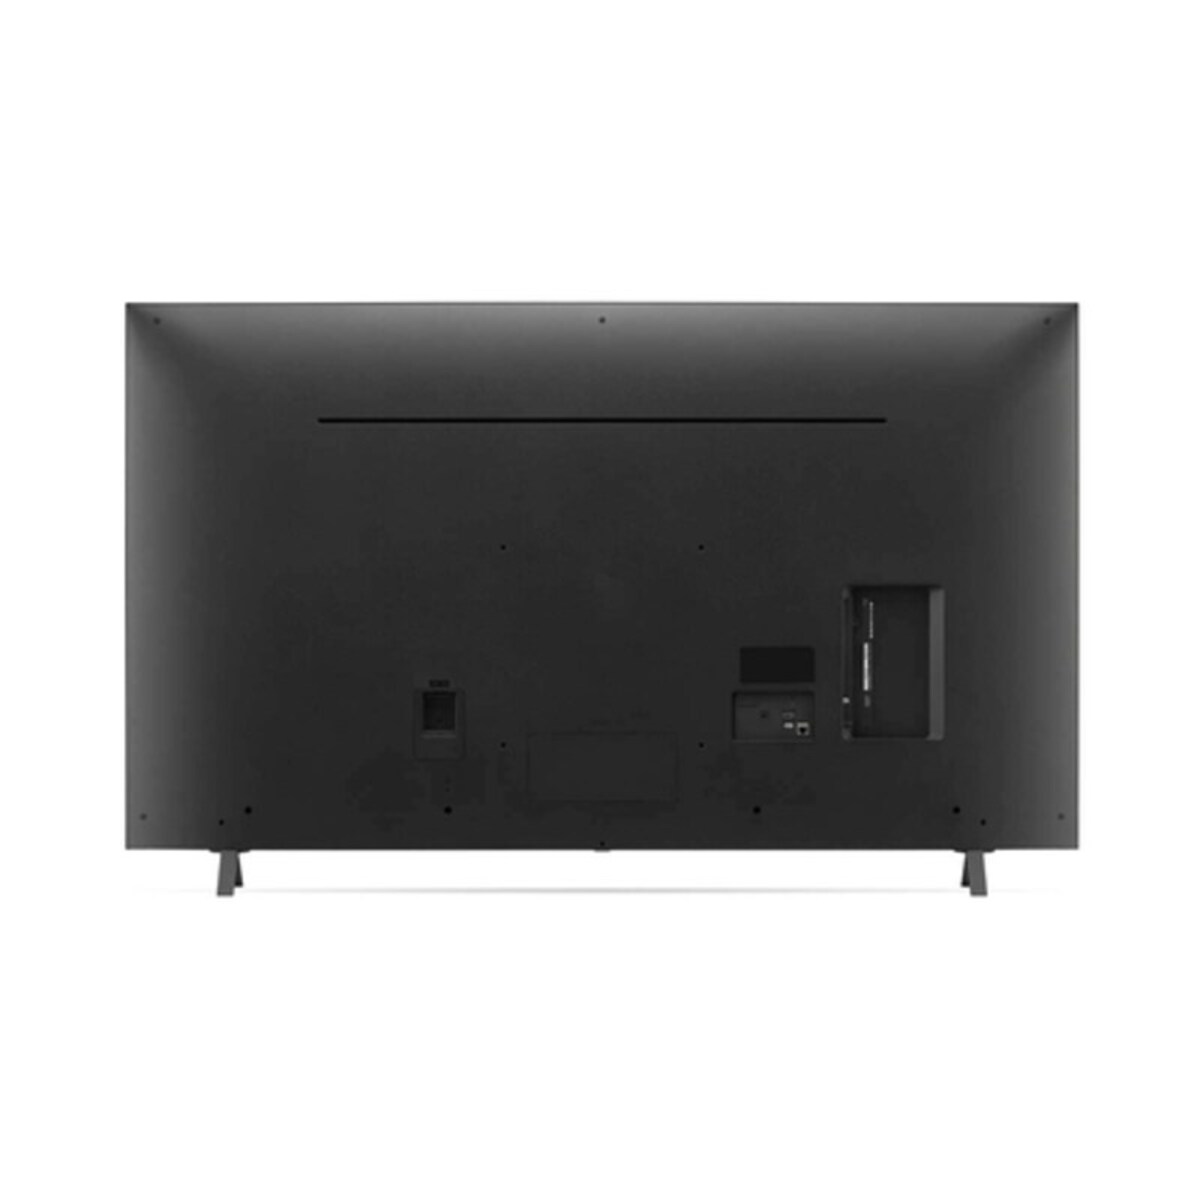 LG UP77 Series 43-Inches UHD 4K LED Smart TV 43UP7750PVB, Black